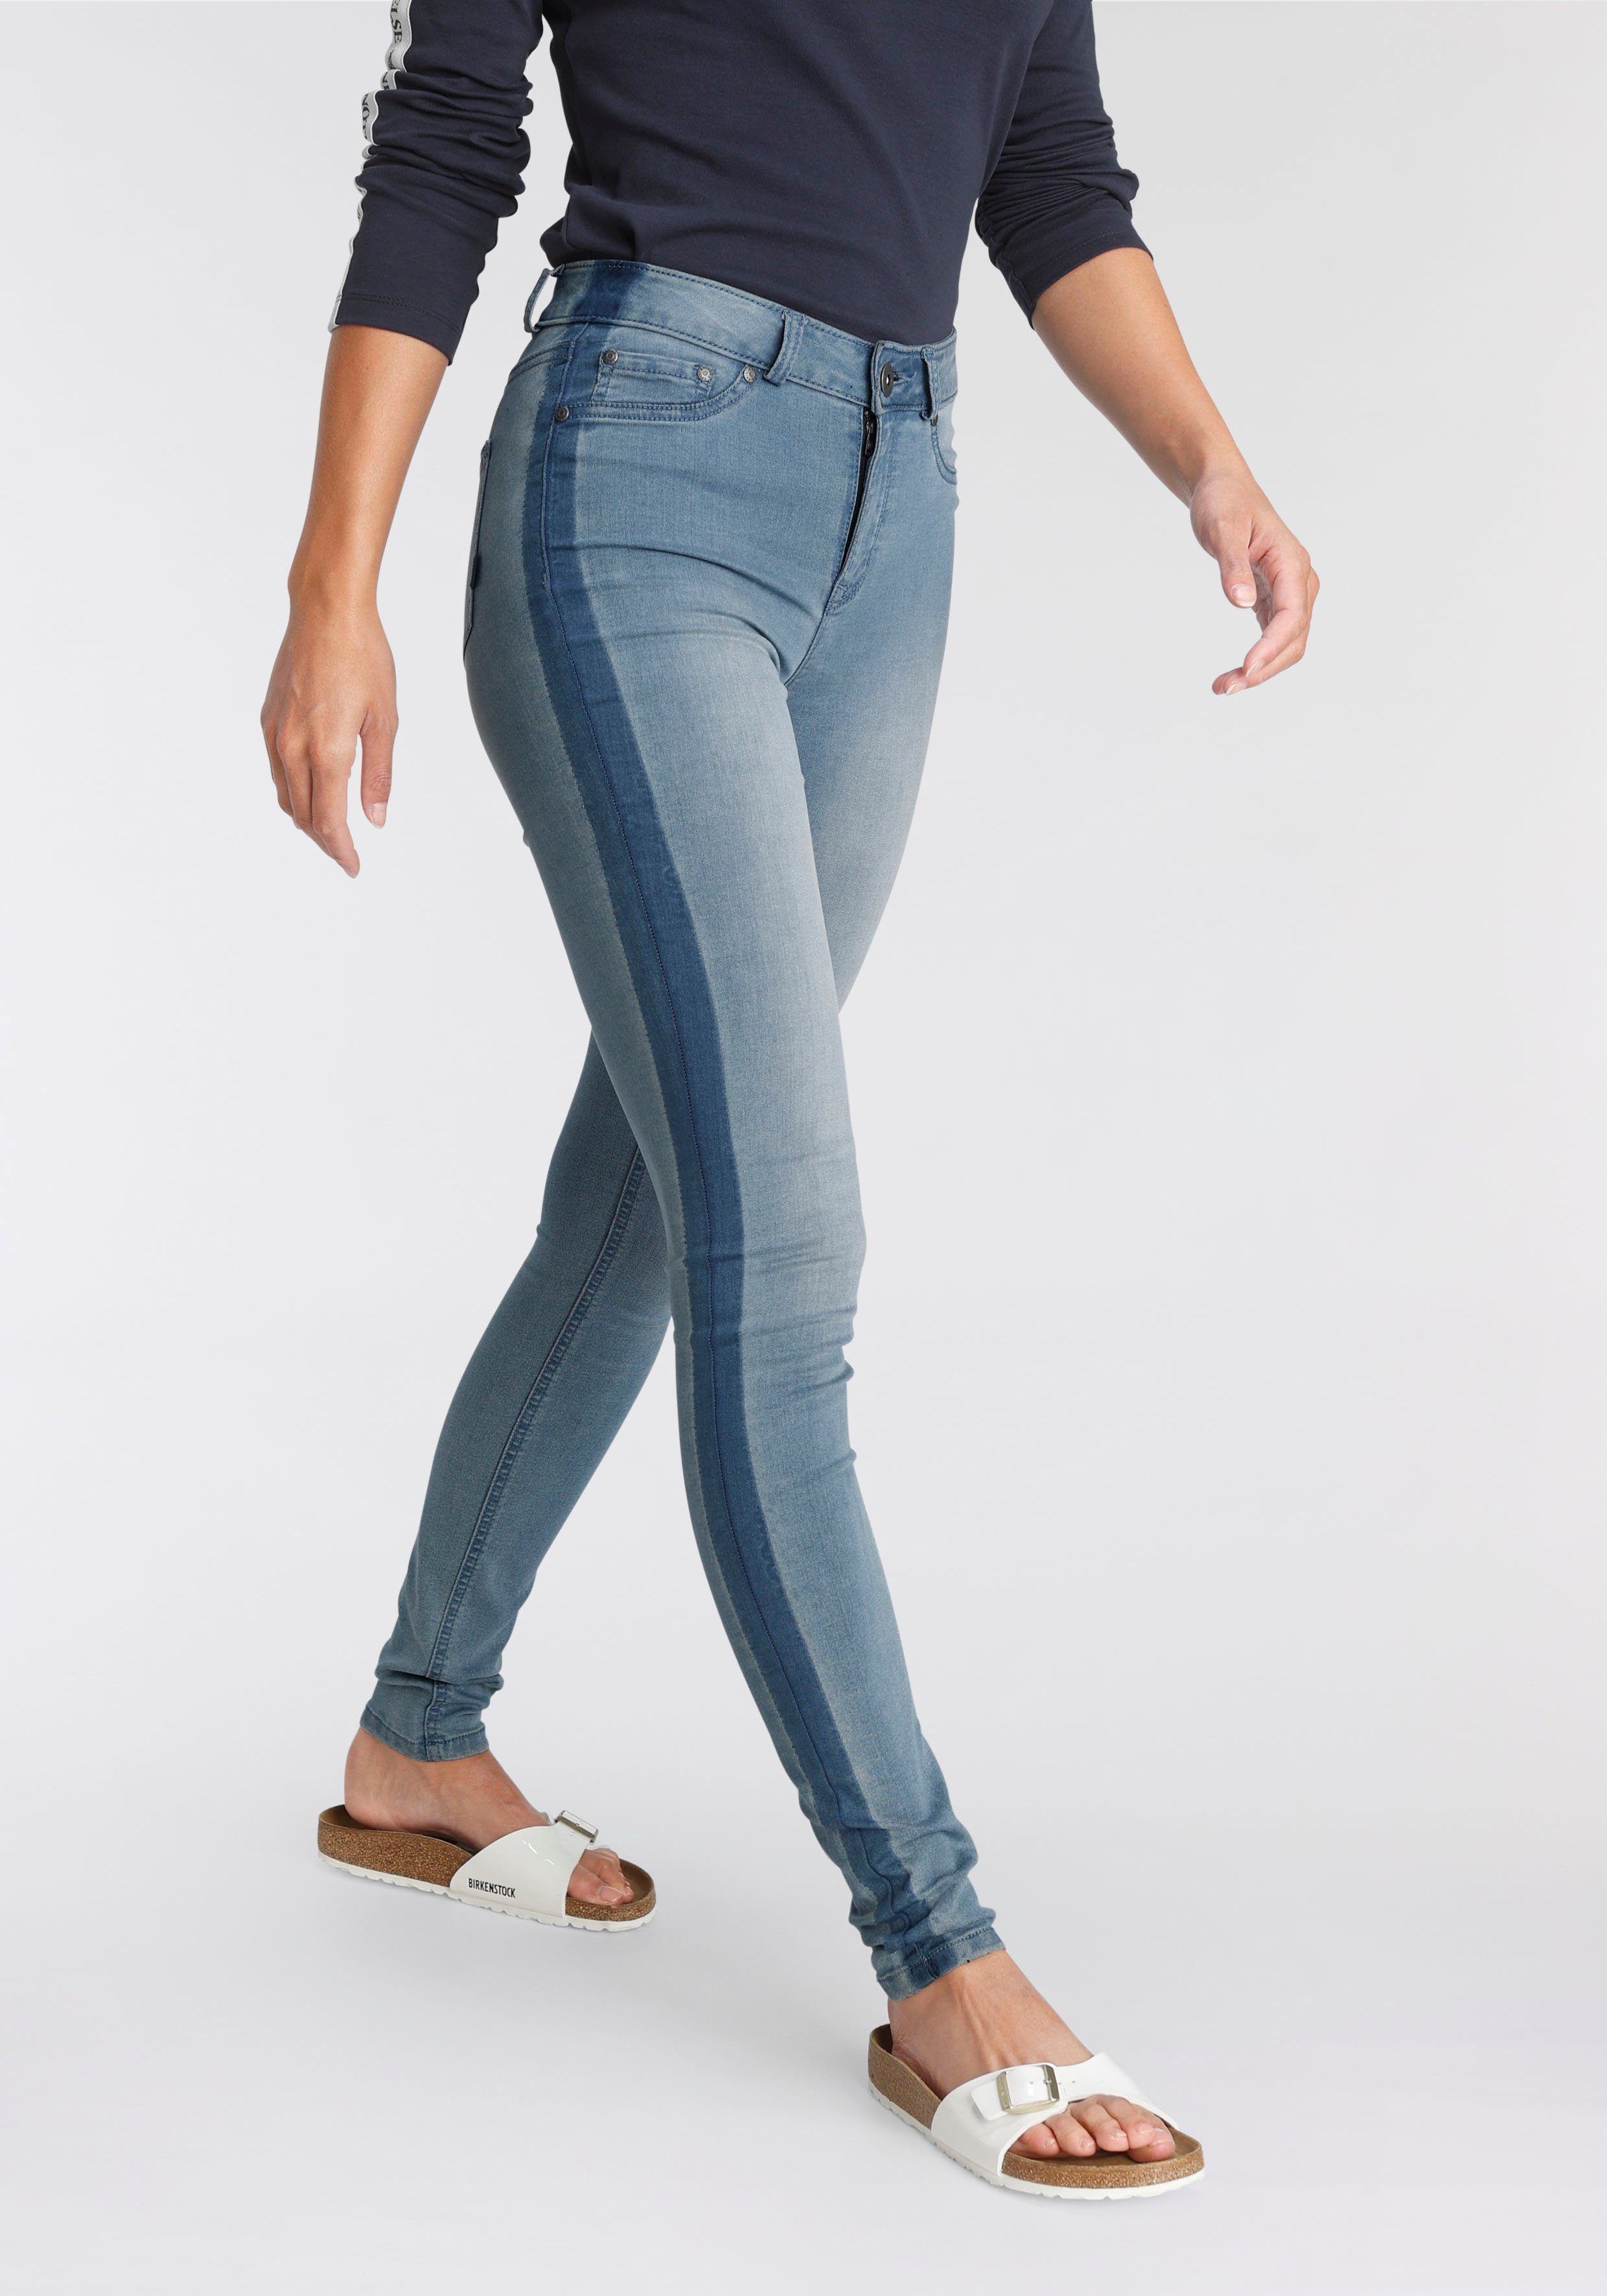 Arizona High Streifen blue-used seitlichem Skinny-fit-Jeans Stretch Waist mit Ultra